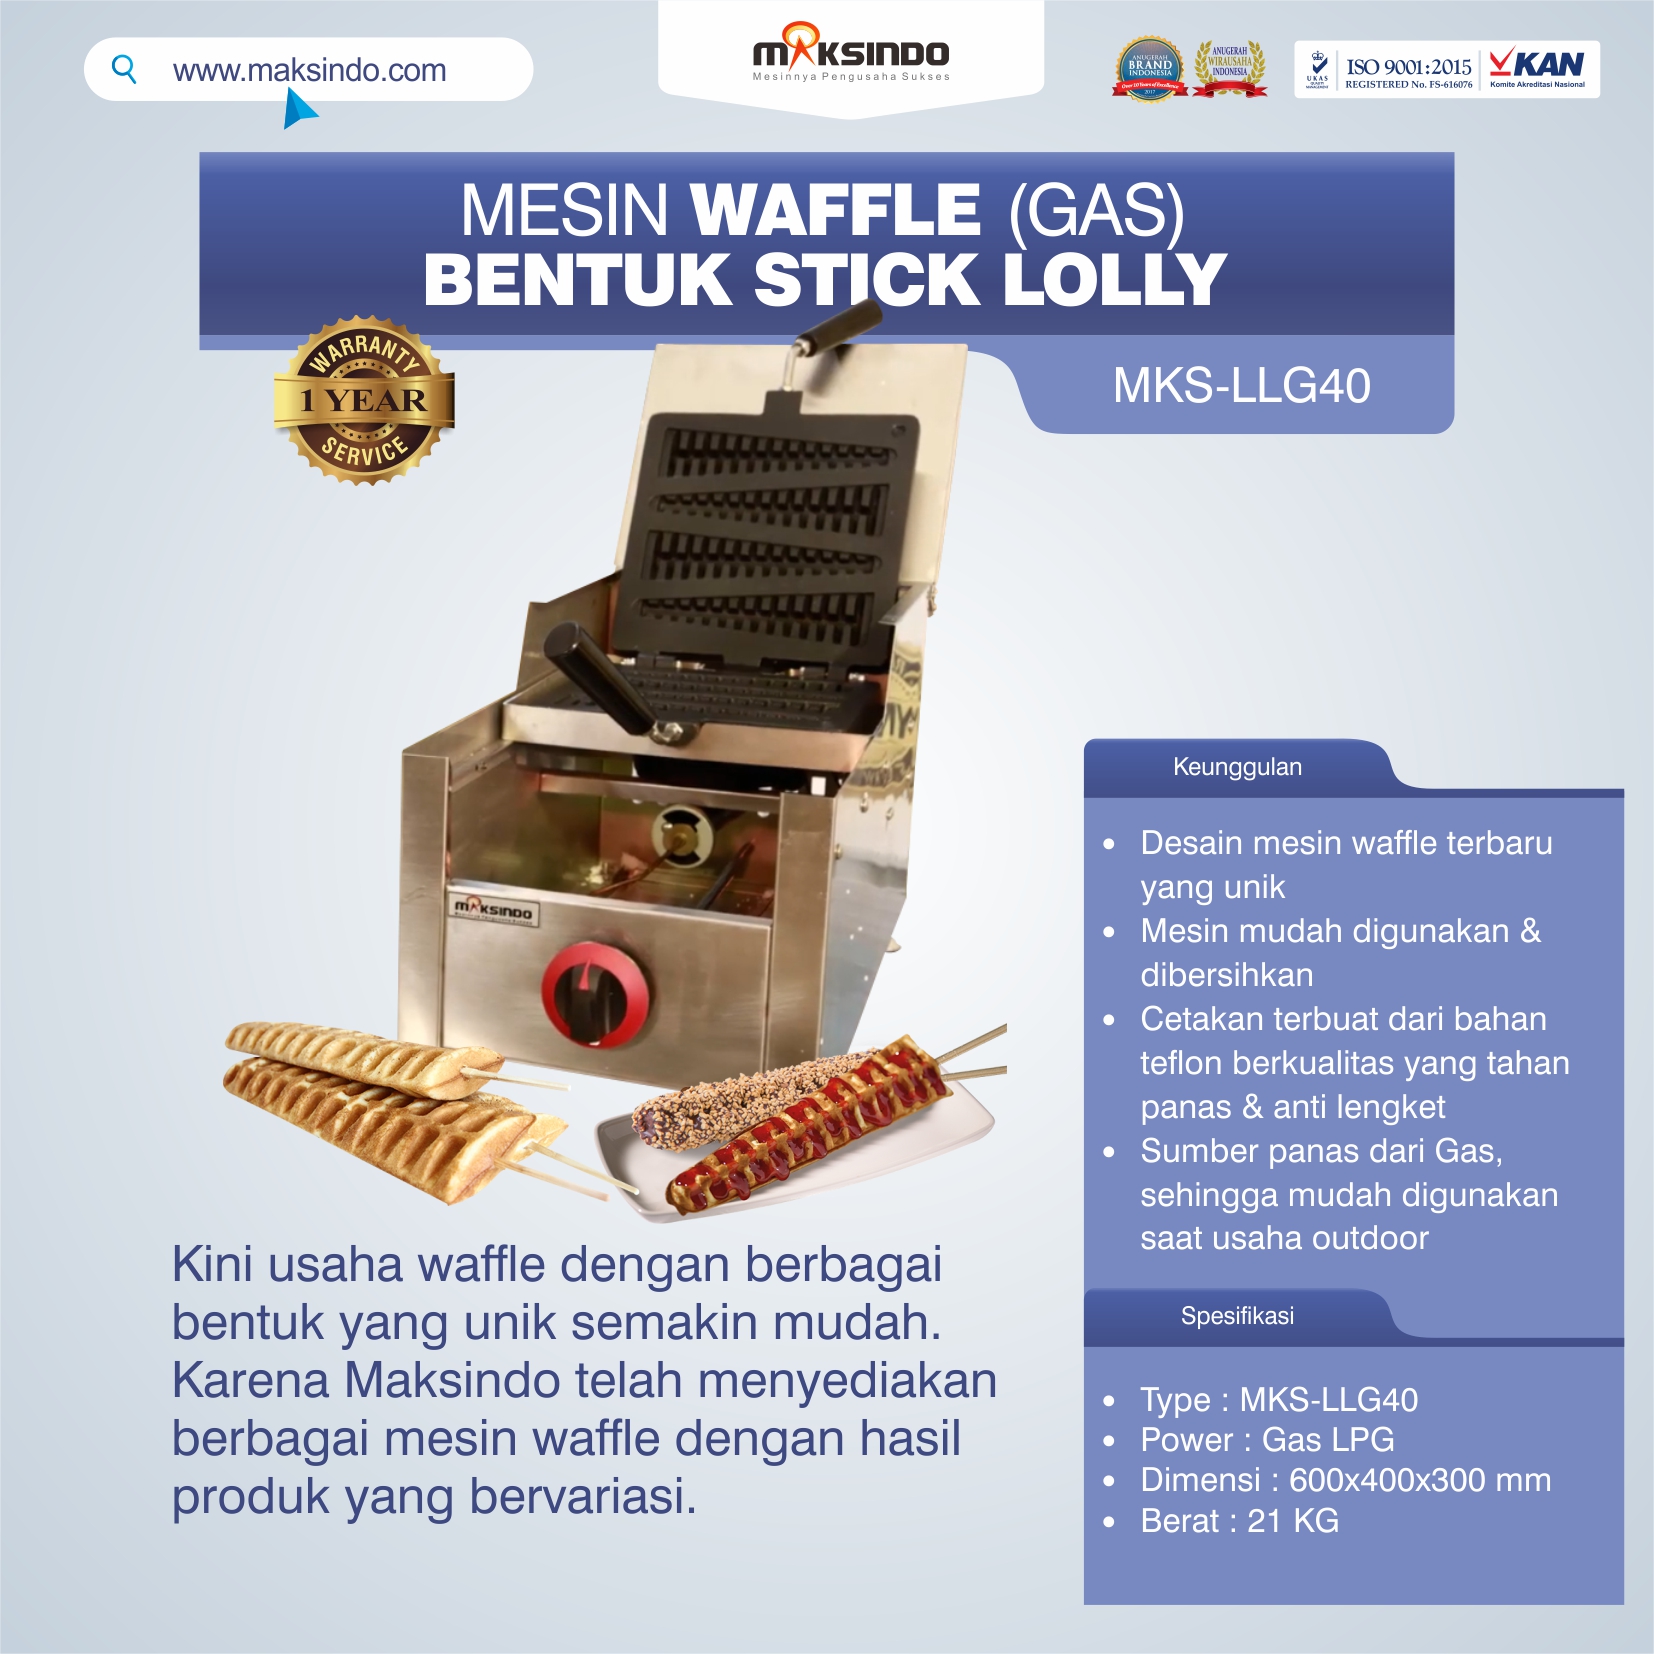 Mesin Waffle Bentuk Stick Lolly (Gas) MKS-LLG40